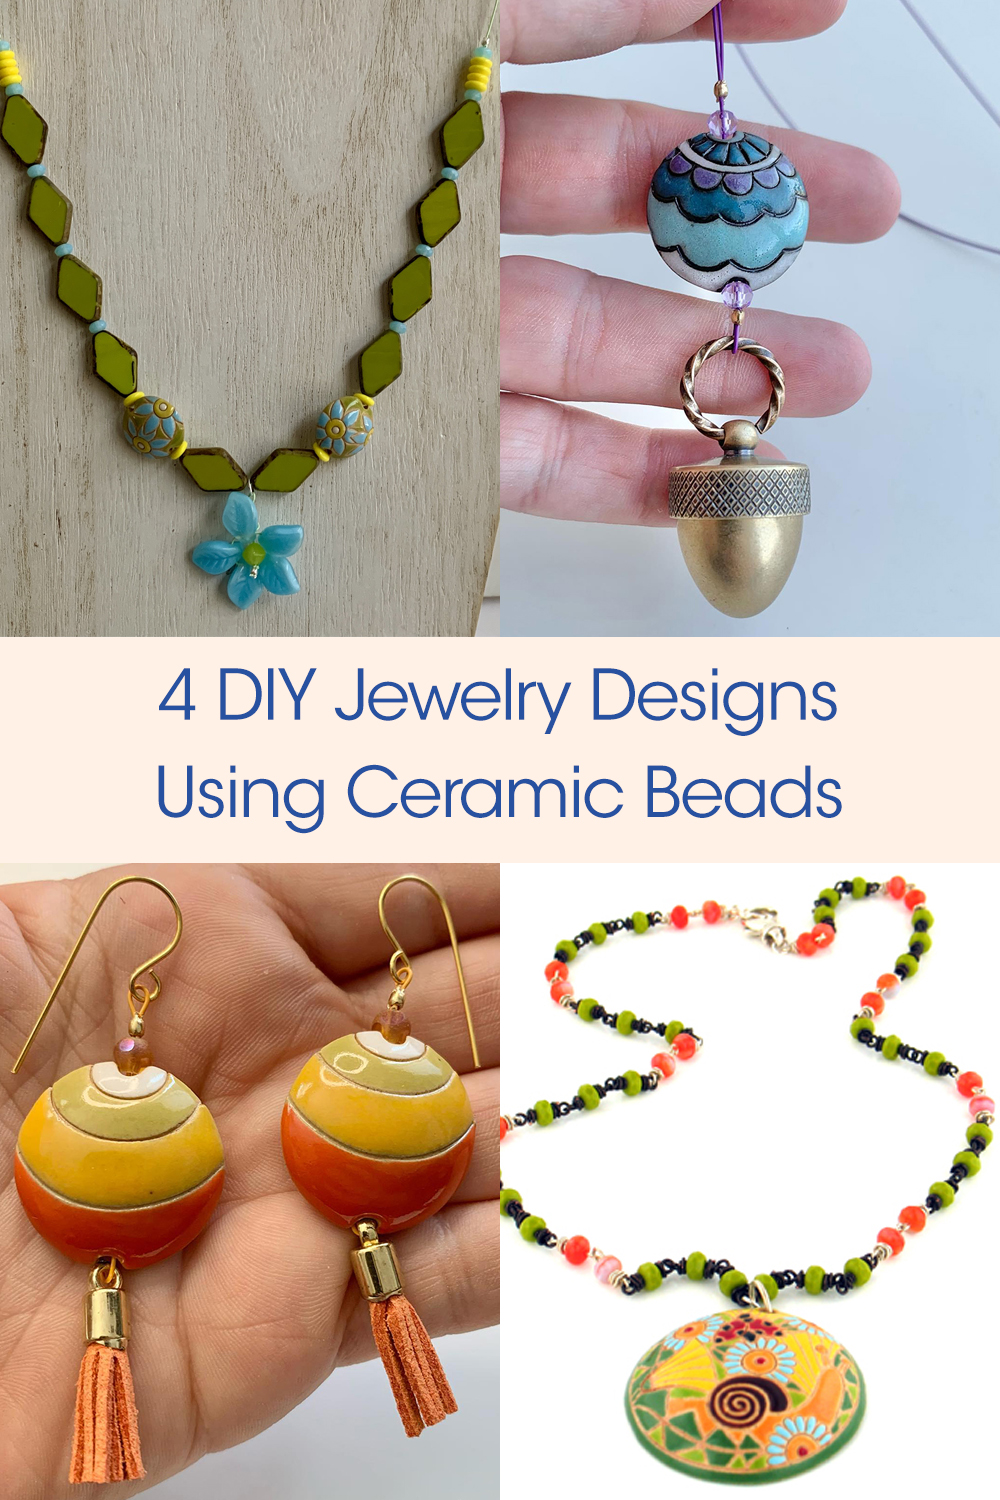 Crimp Beads, Jewelry Making, Hobbies